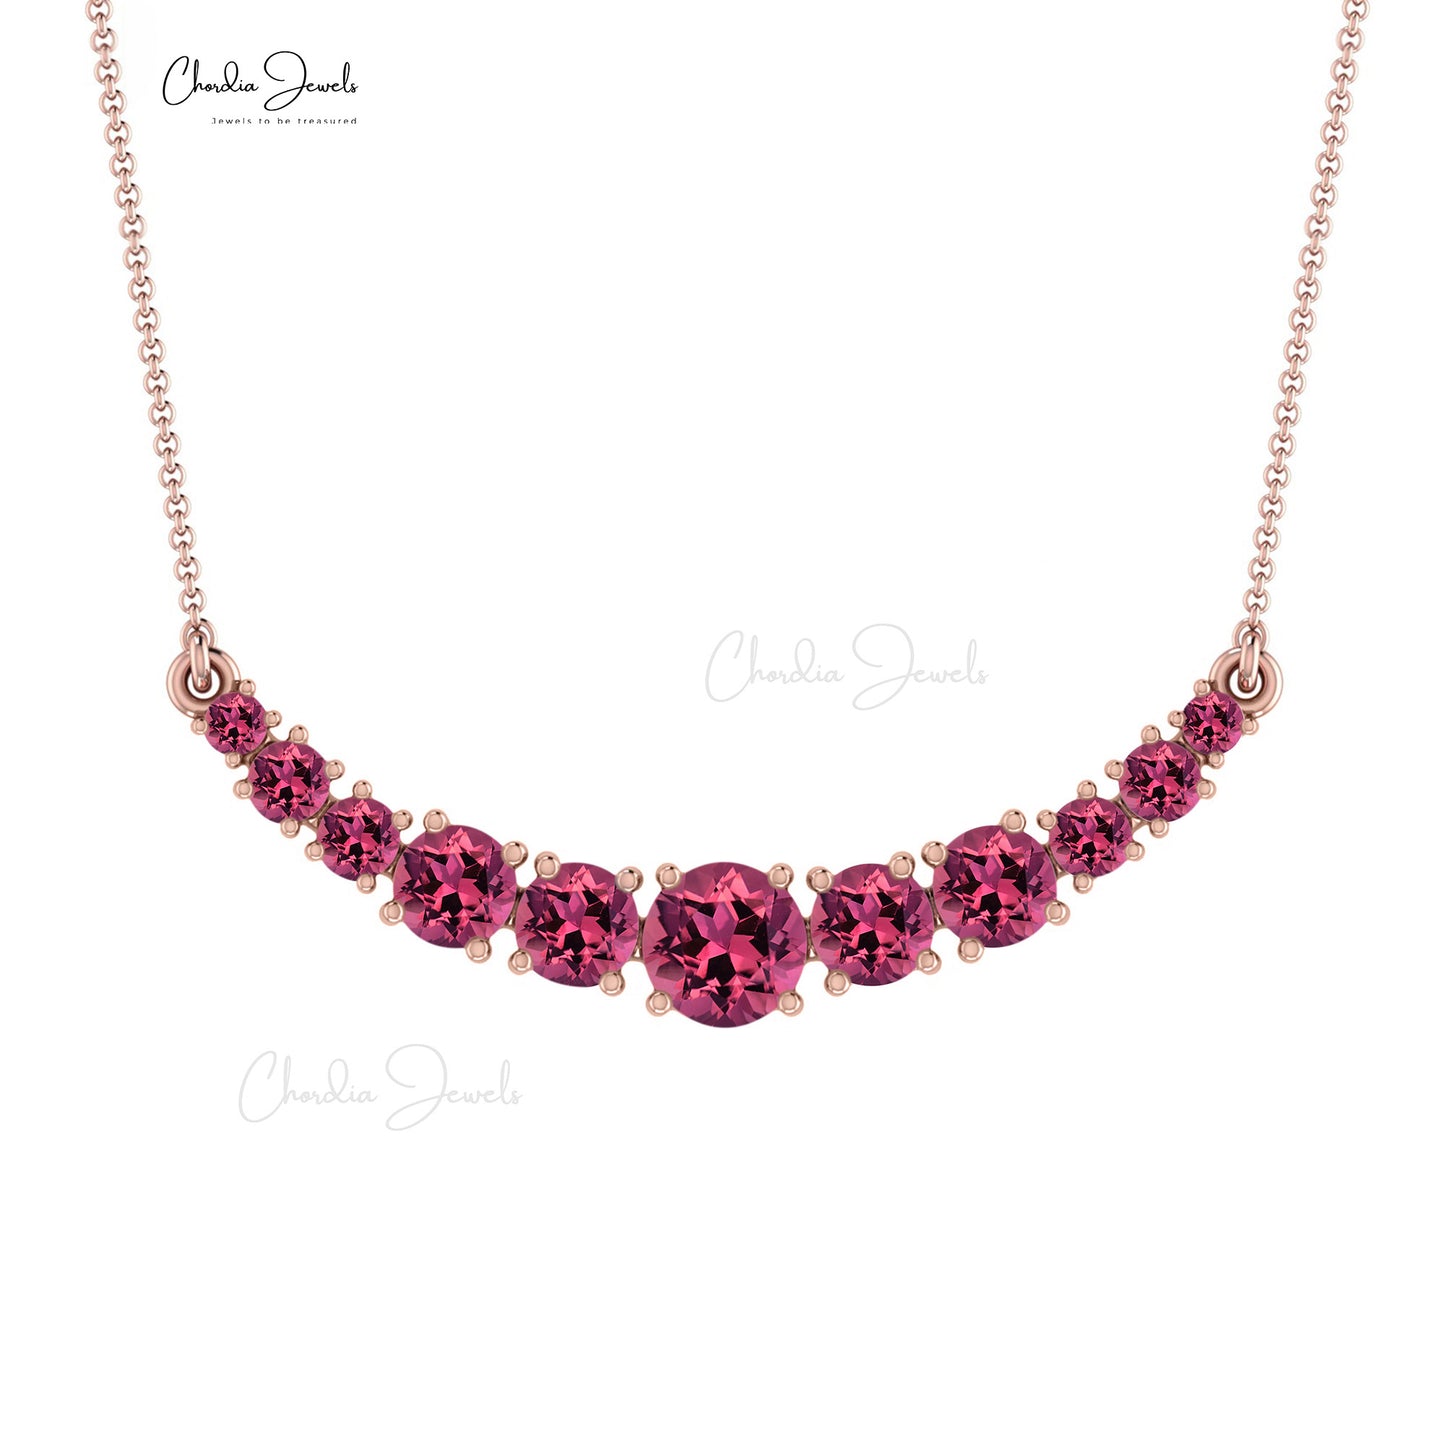 1.19 Carat Natural Pink Tourmaline Necklace, 14k Solid Gold Gemstone Necklace, October Birthstone Handmade Necklace Gift for Her